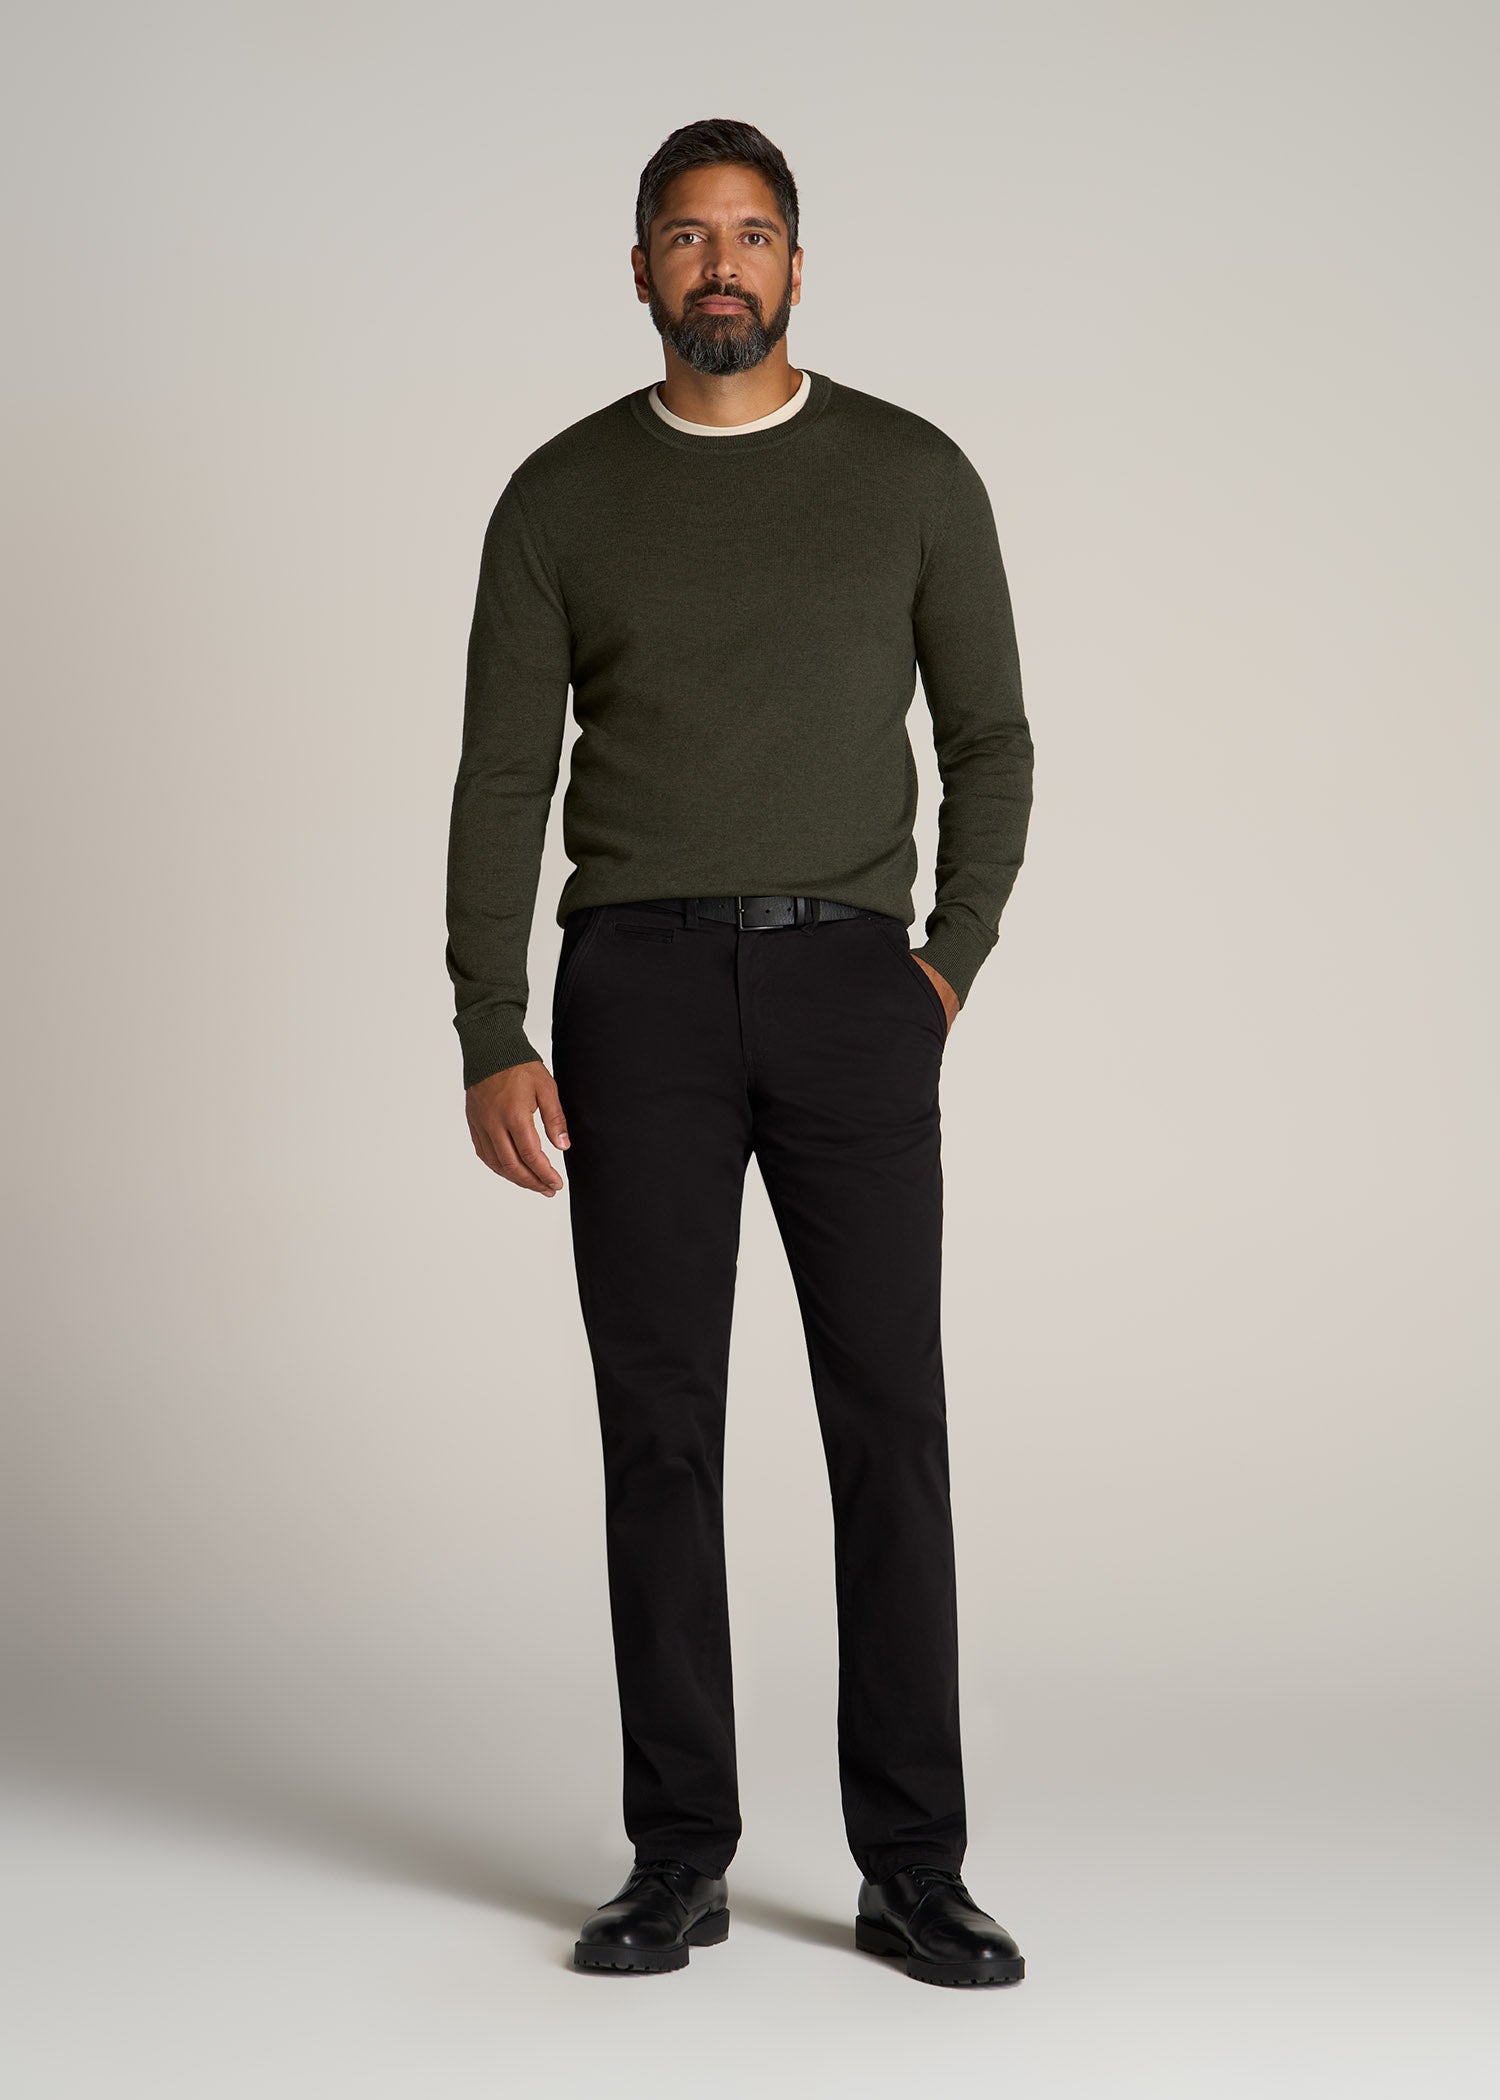 American-Tall-Men-Everyday-Crew-Neck-Sweater-Dark-Green-Olive-full